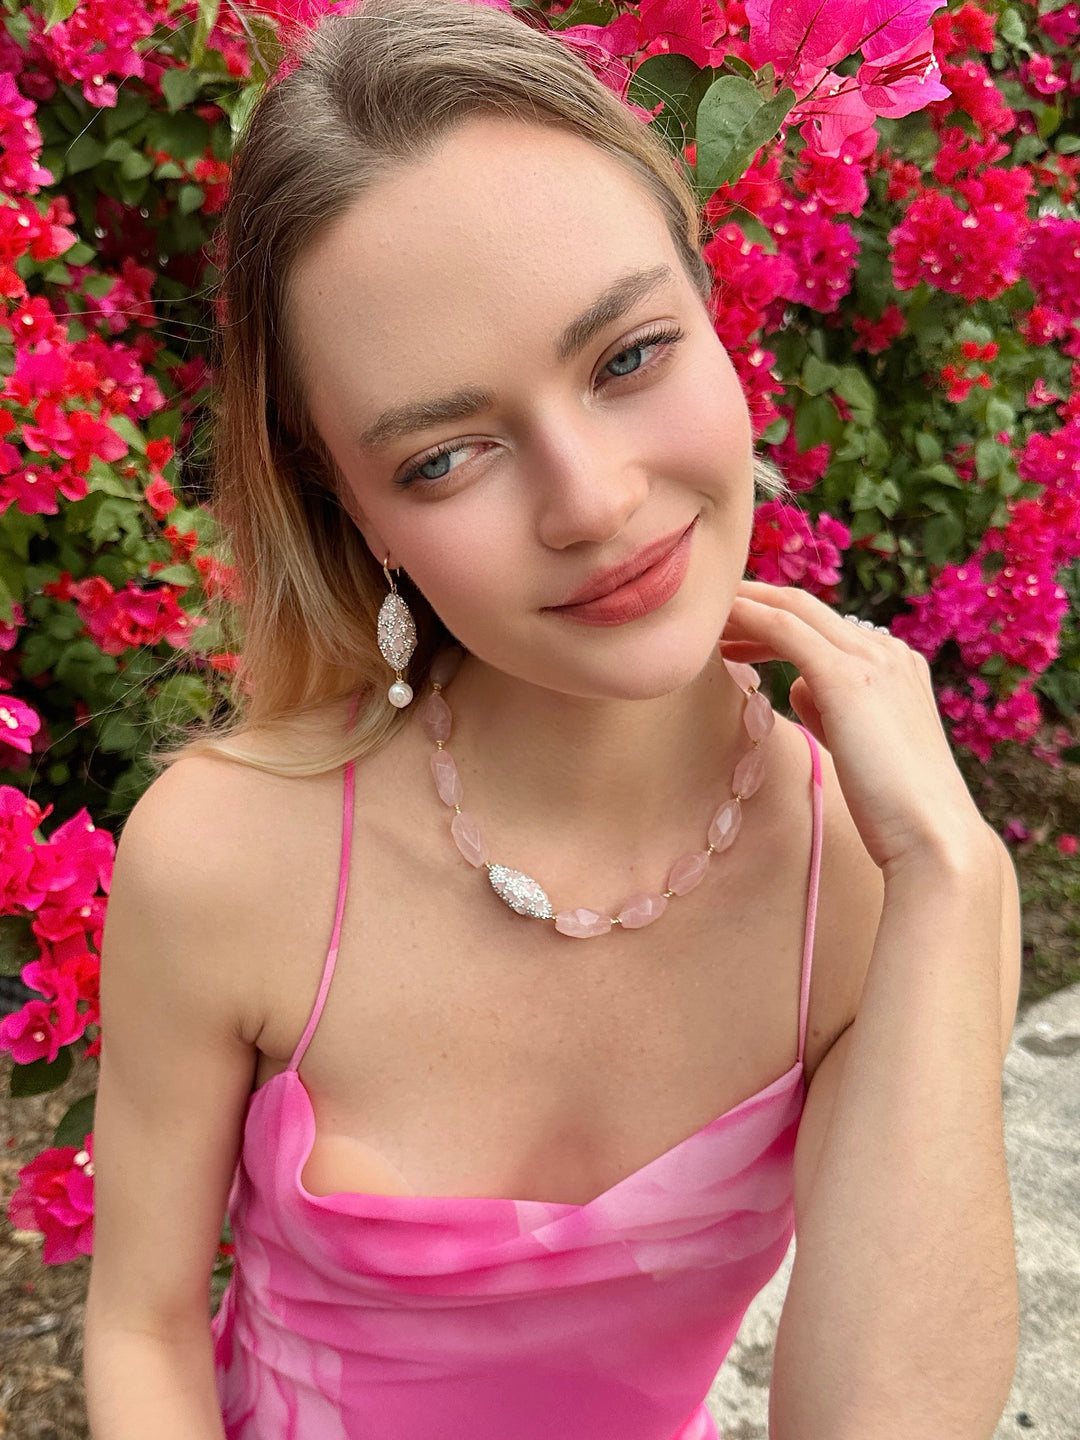 Rose Quartz Elegance Necklace LN010 - FARRA